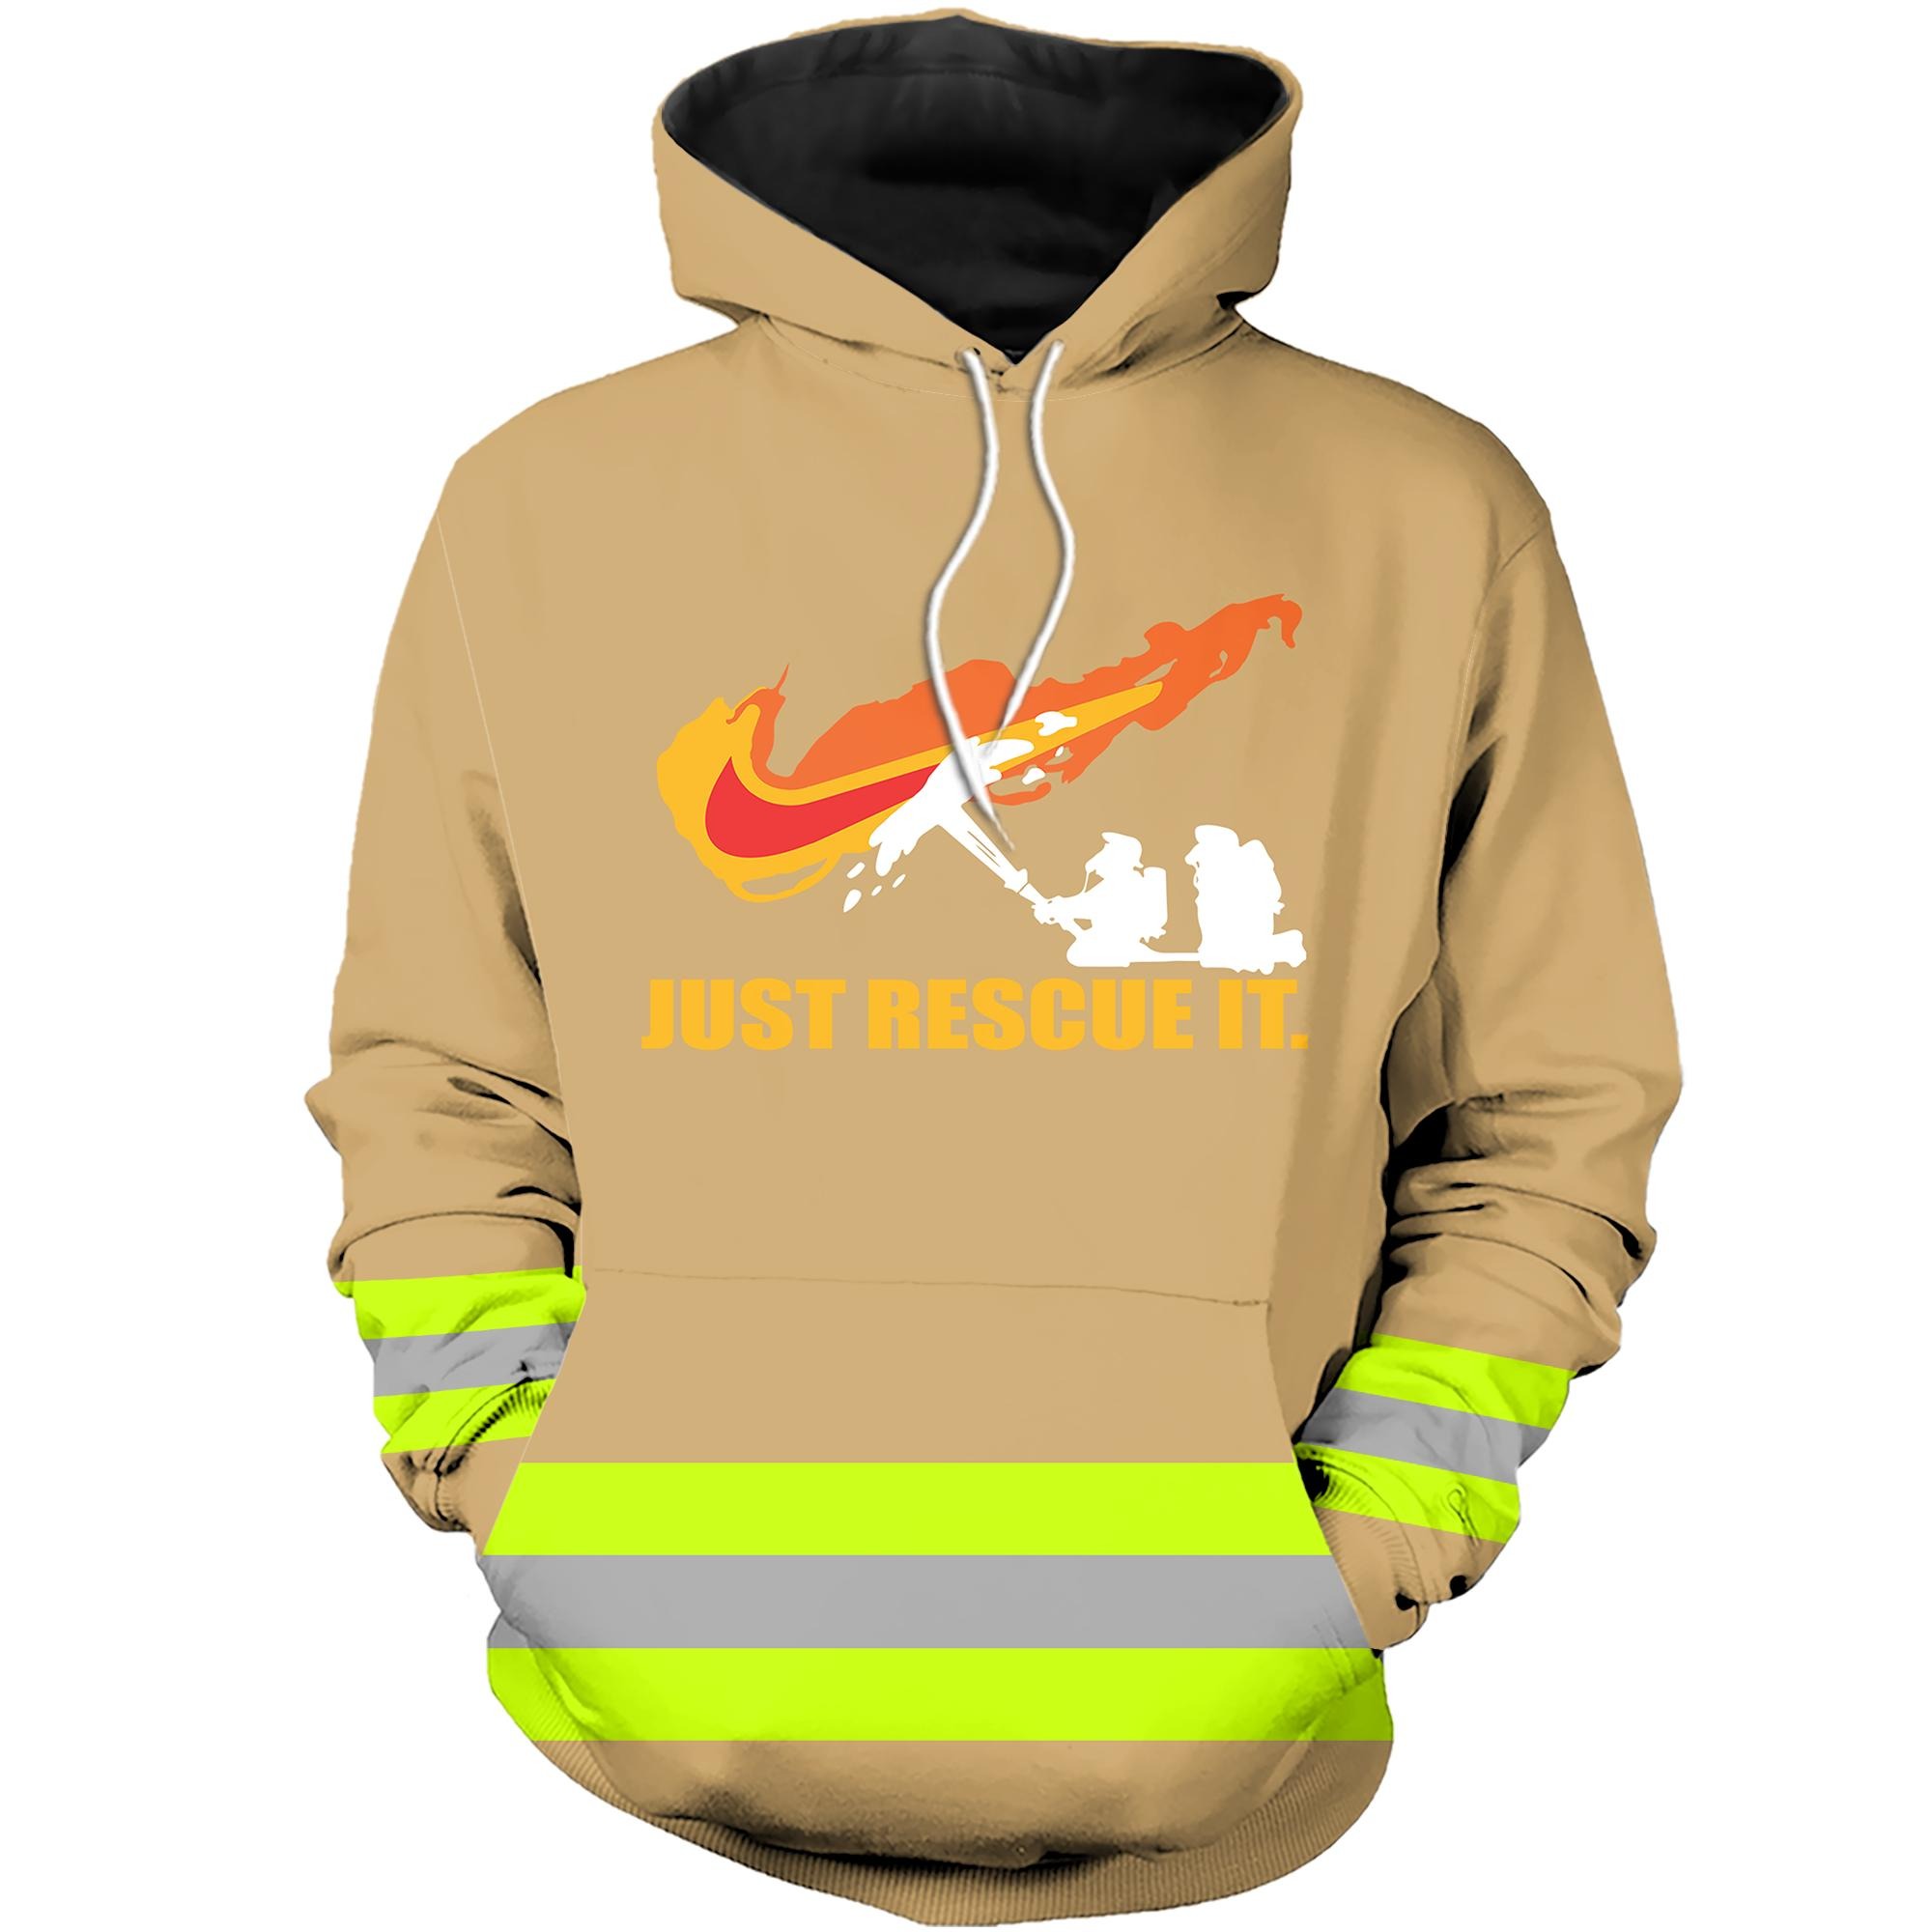 Under armour firefighter 3D hot hoodie